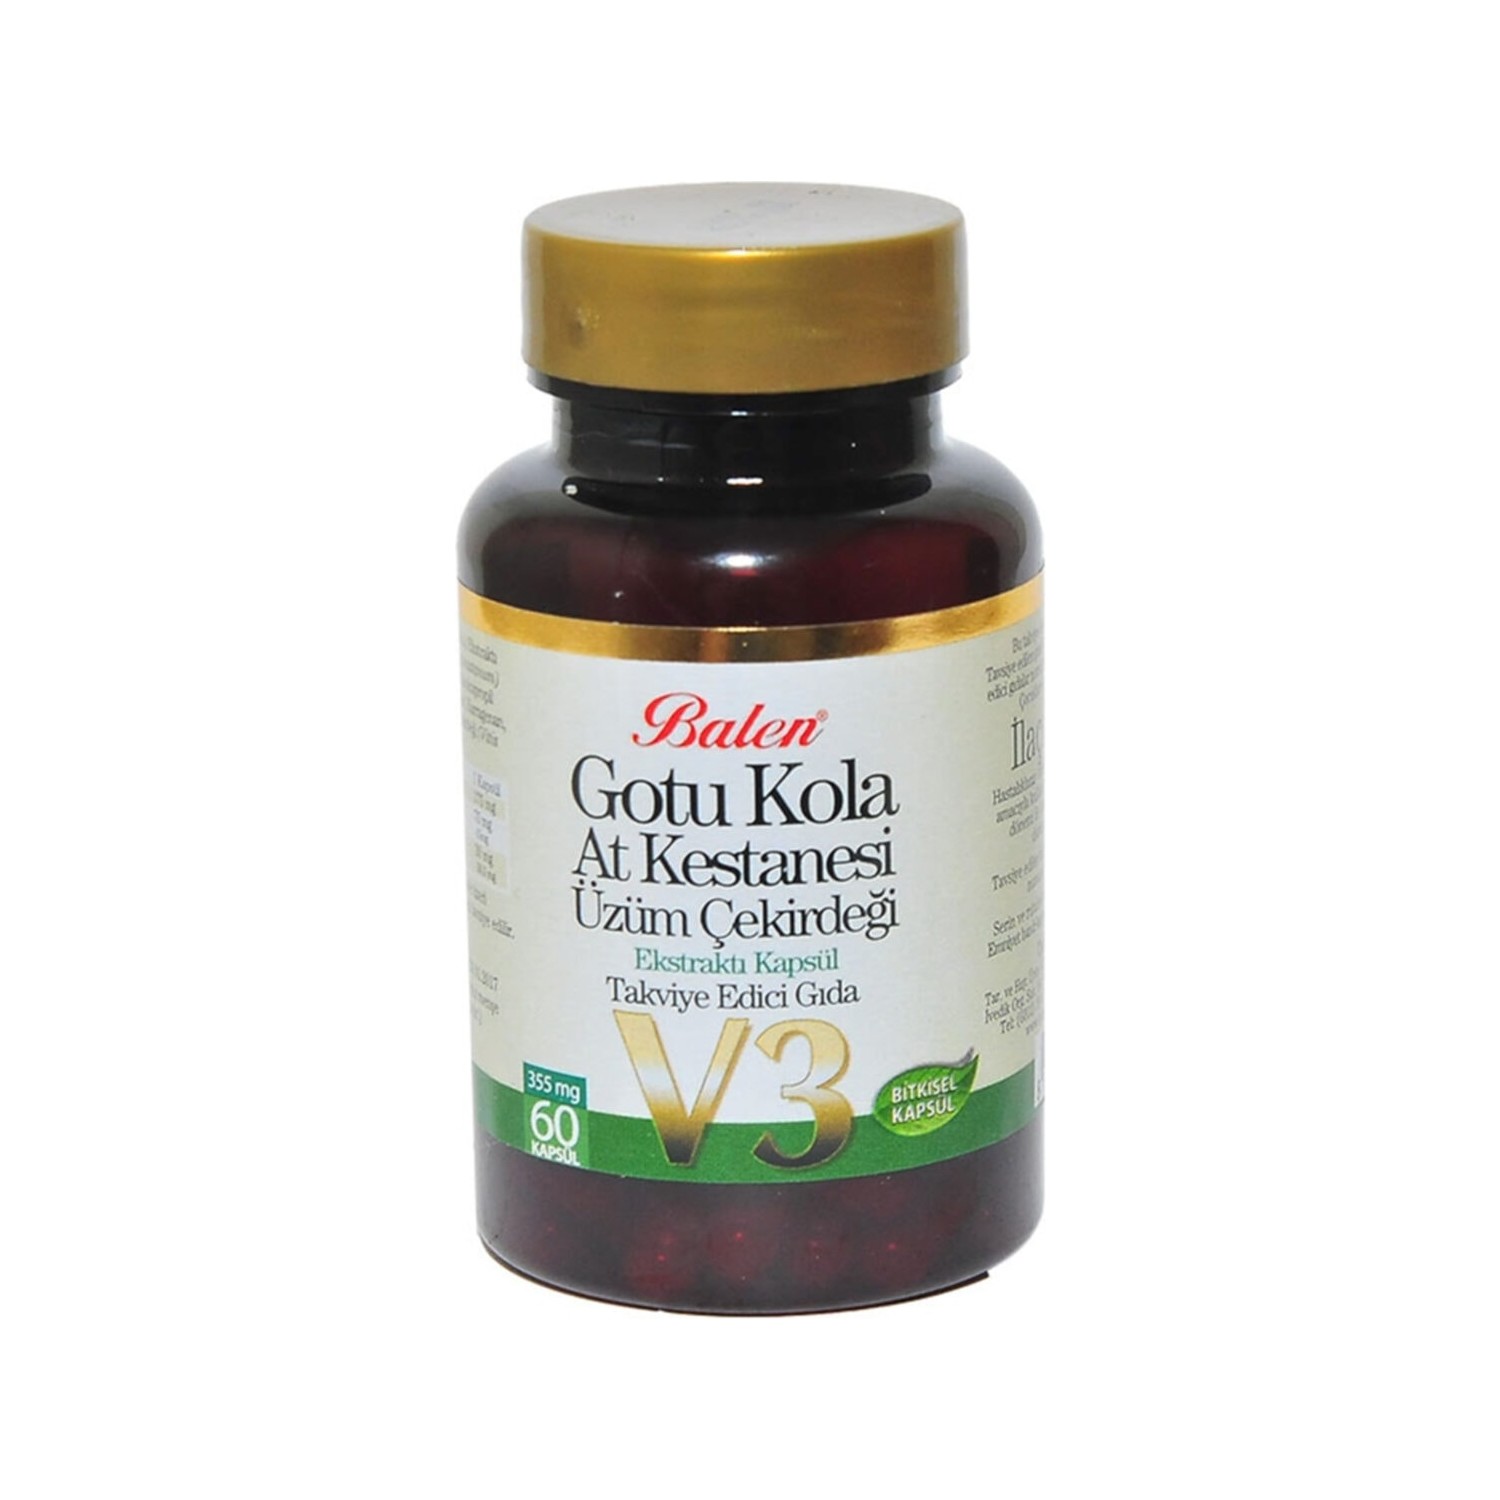 Активная добавка Balen Gotu Kola Horse Chestnut Grape Seed Extract V3, 60 капсул, 355 мг